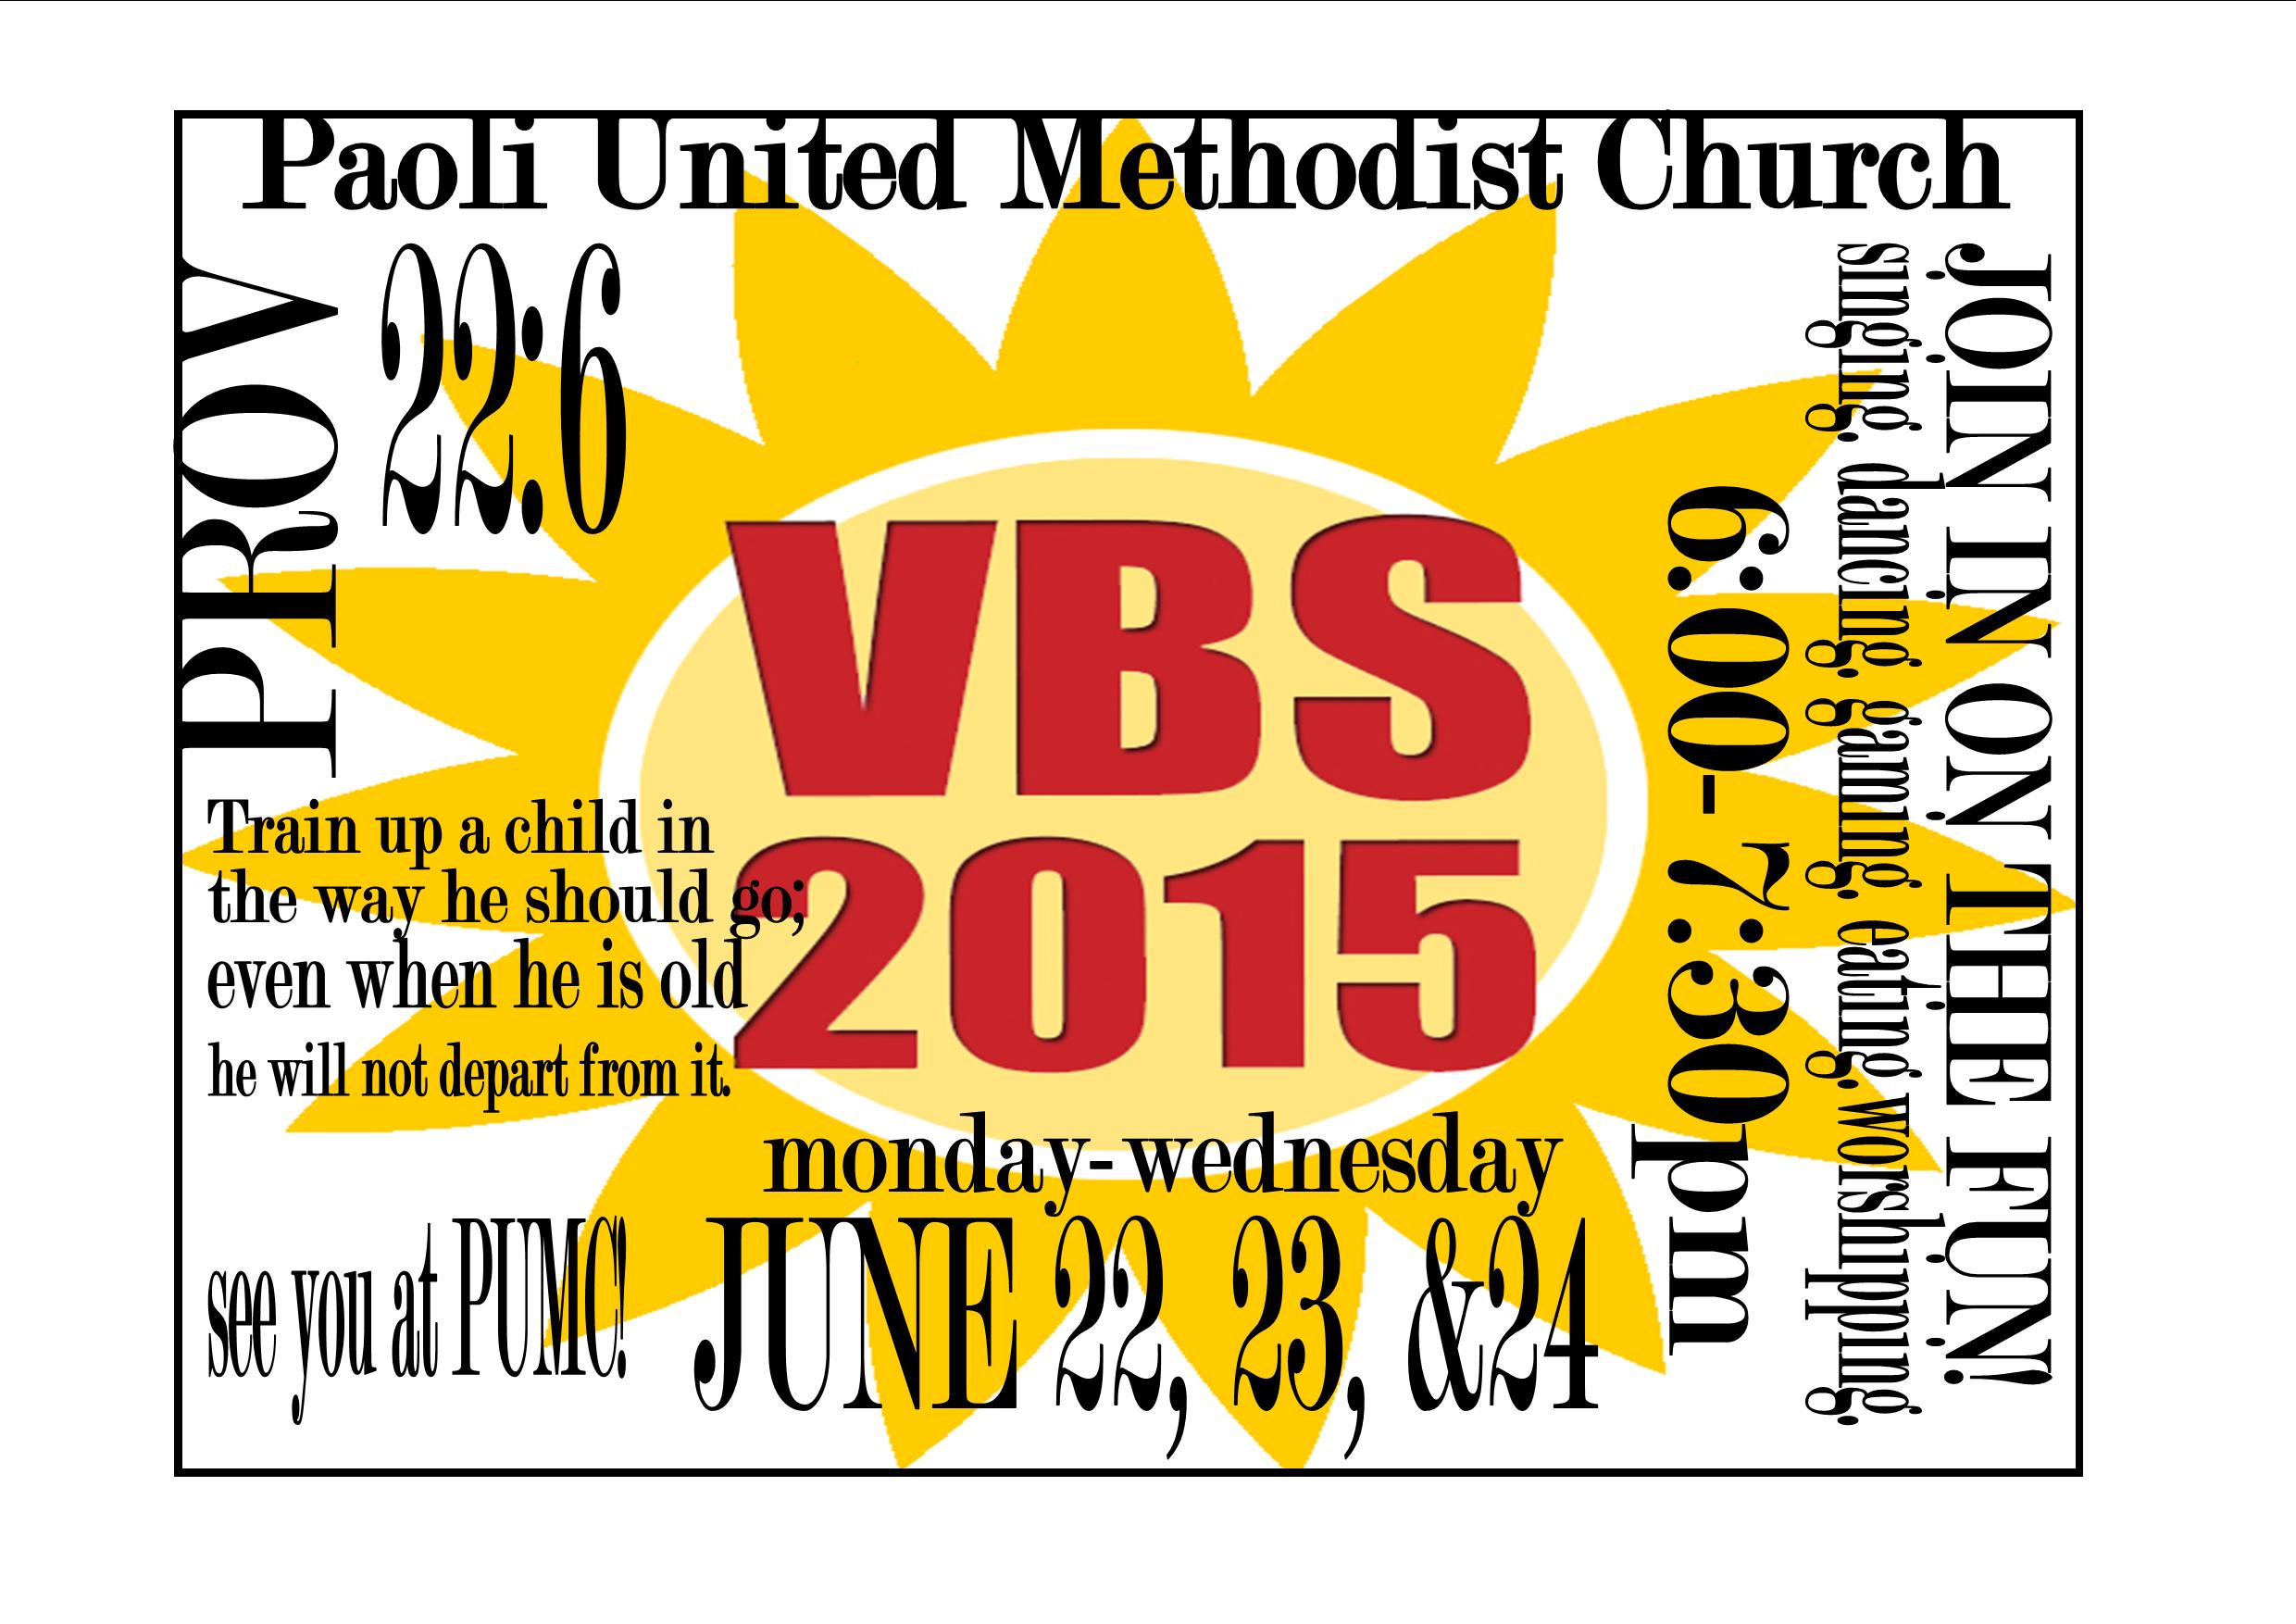 Paoli UMC Vacation Bible School announcement for June 2015.